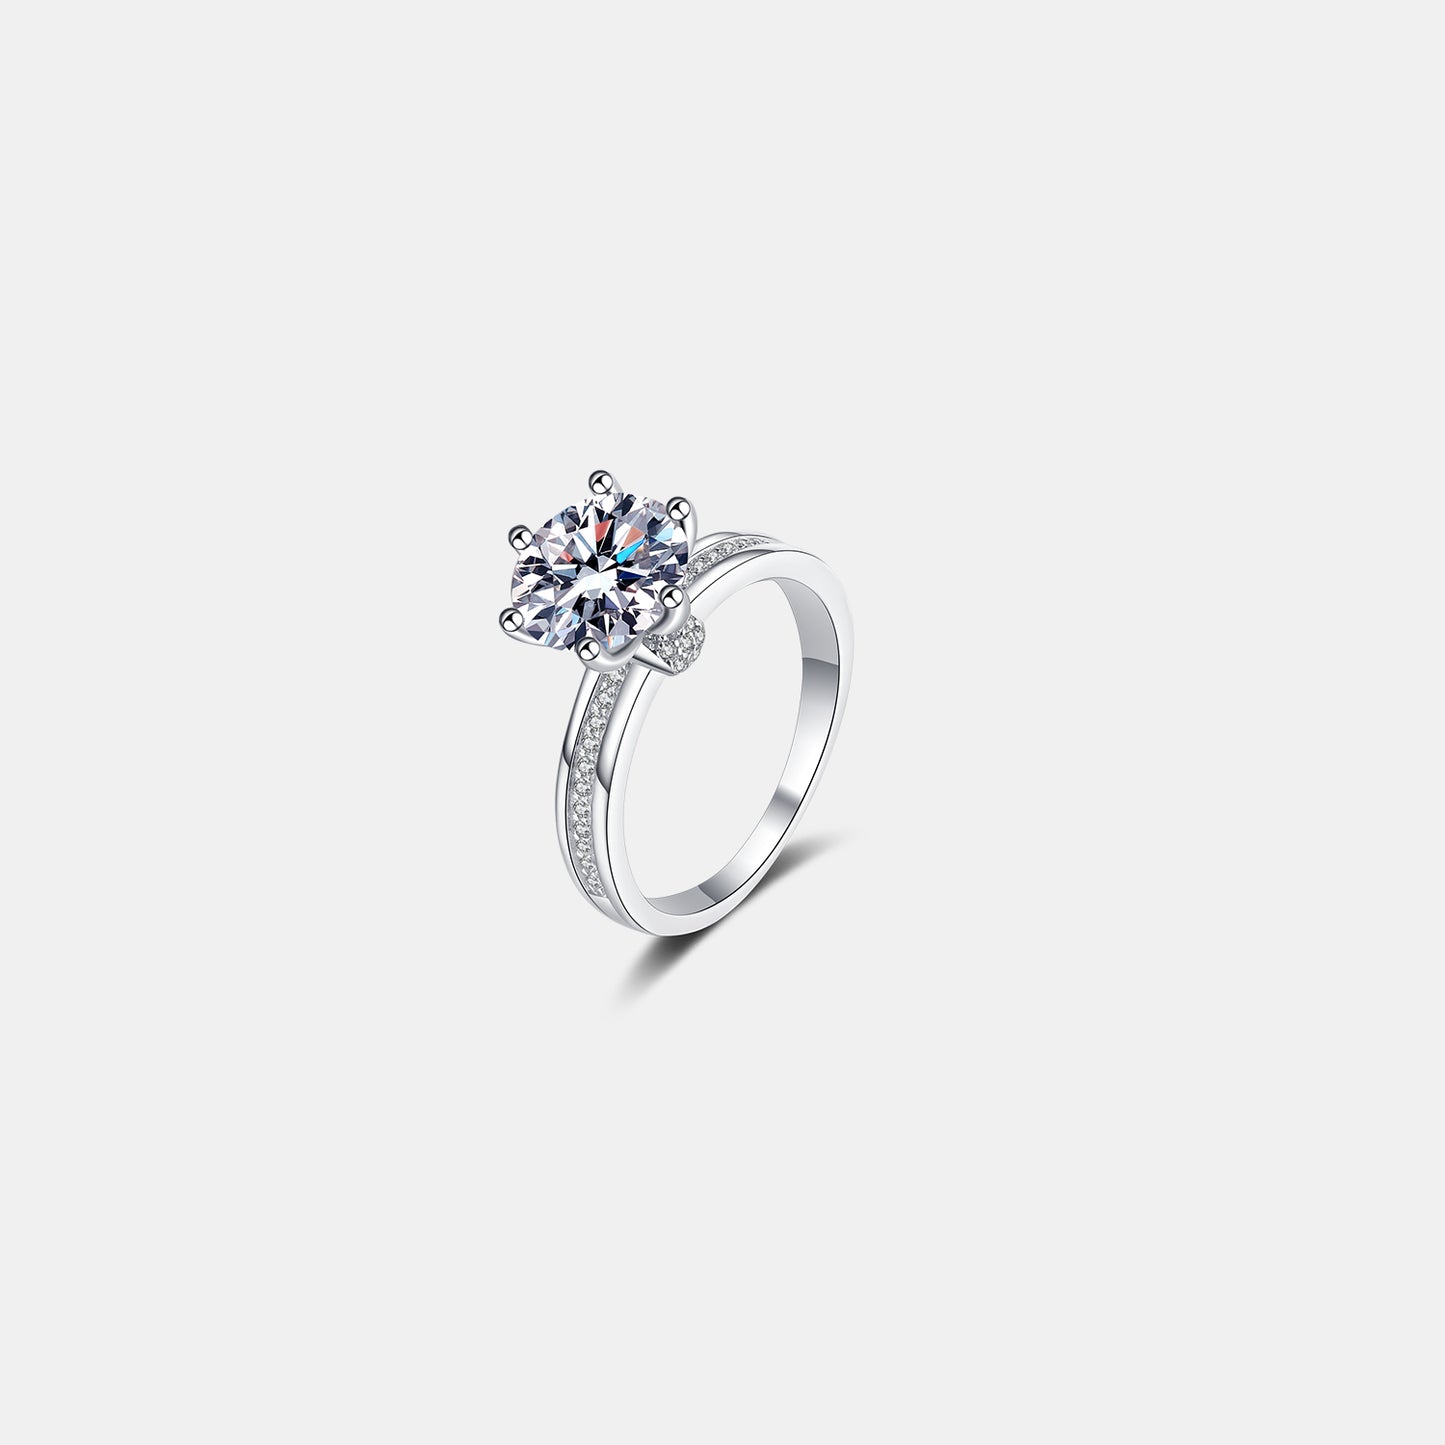 PREORDER- 3 Carat Moissanite 925 Sterling Silver Ring